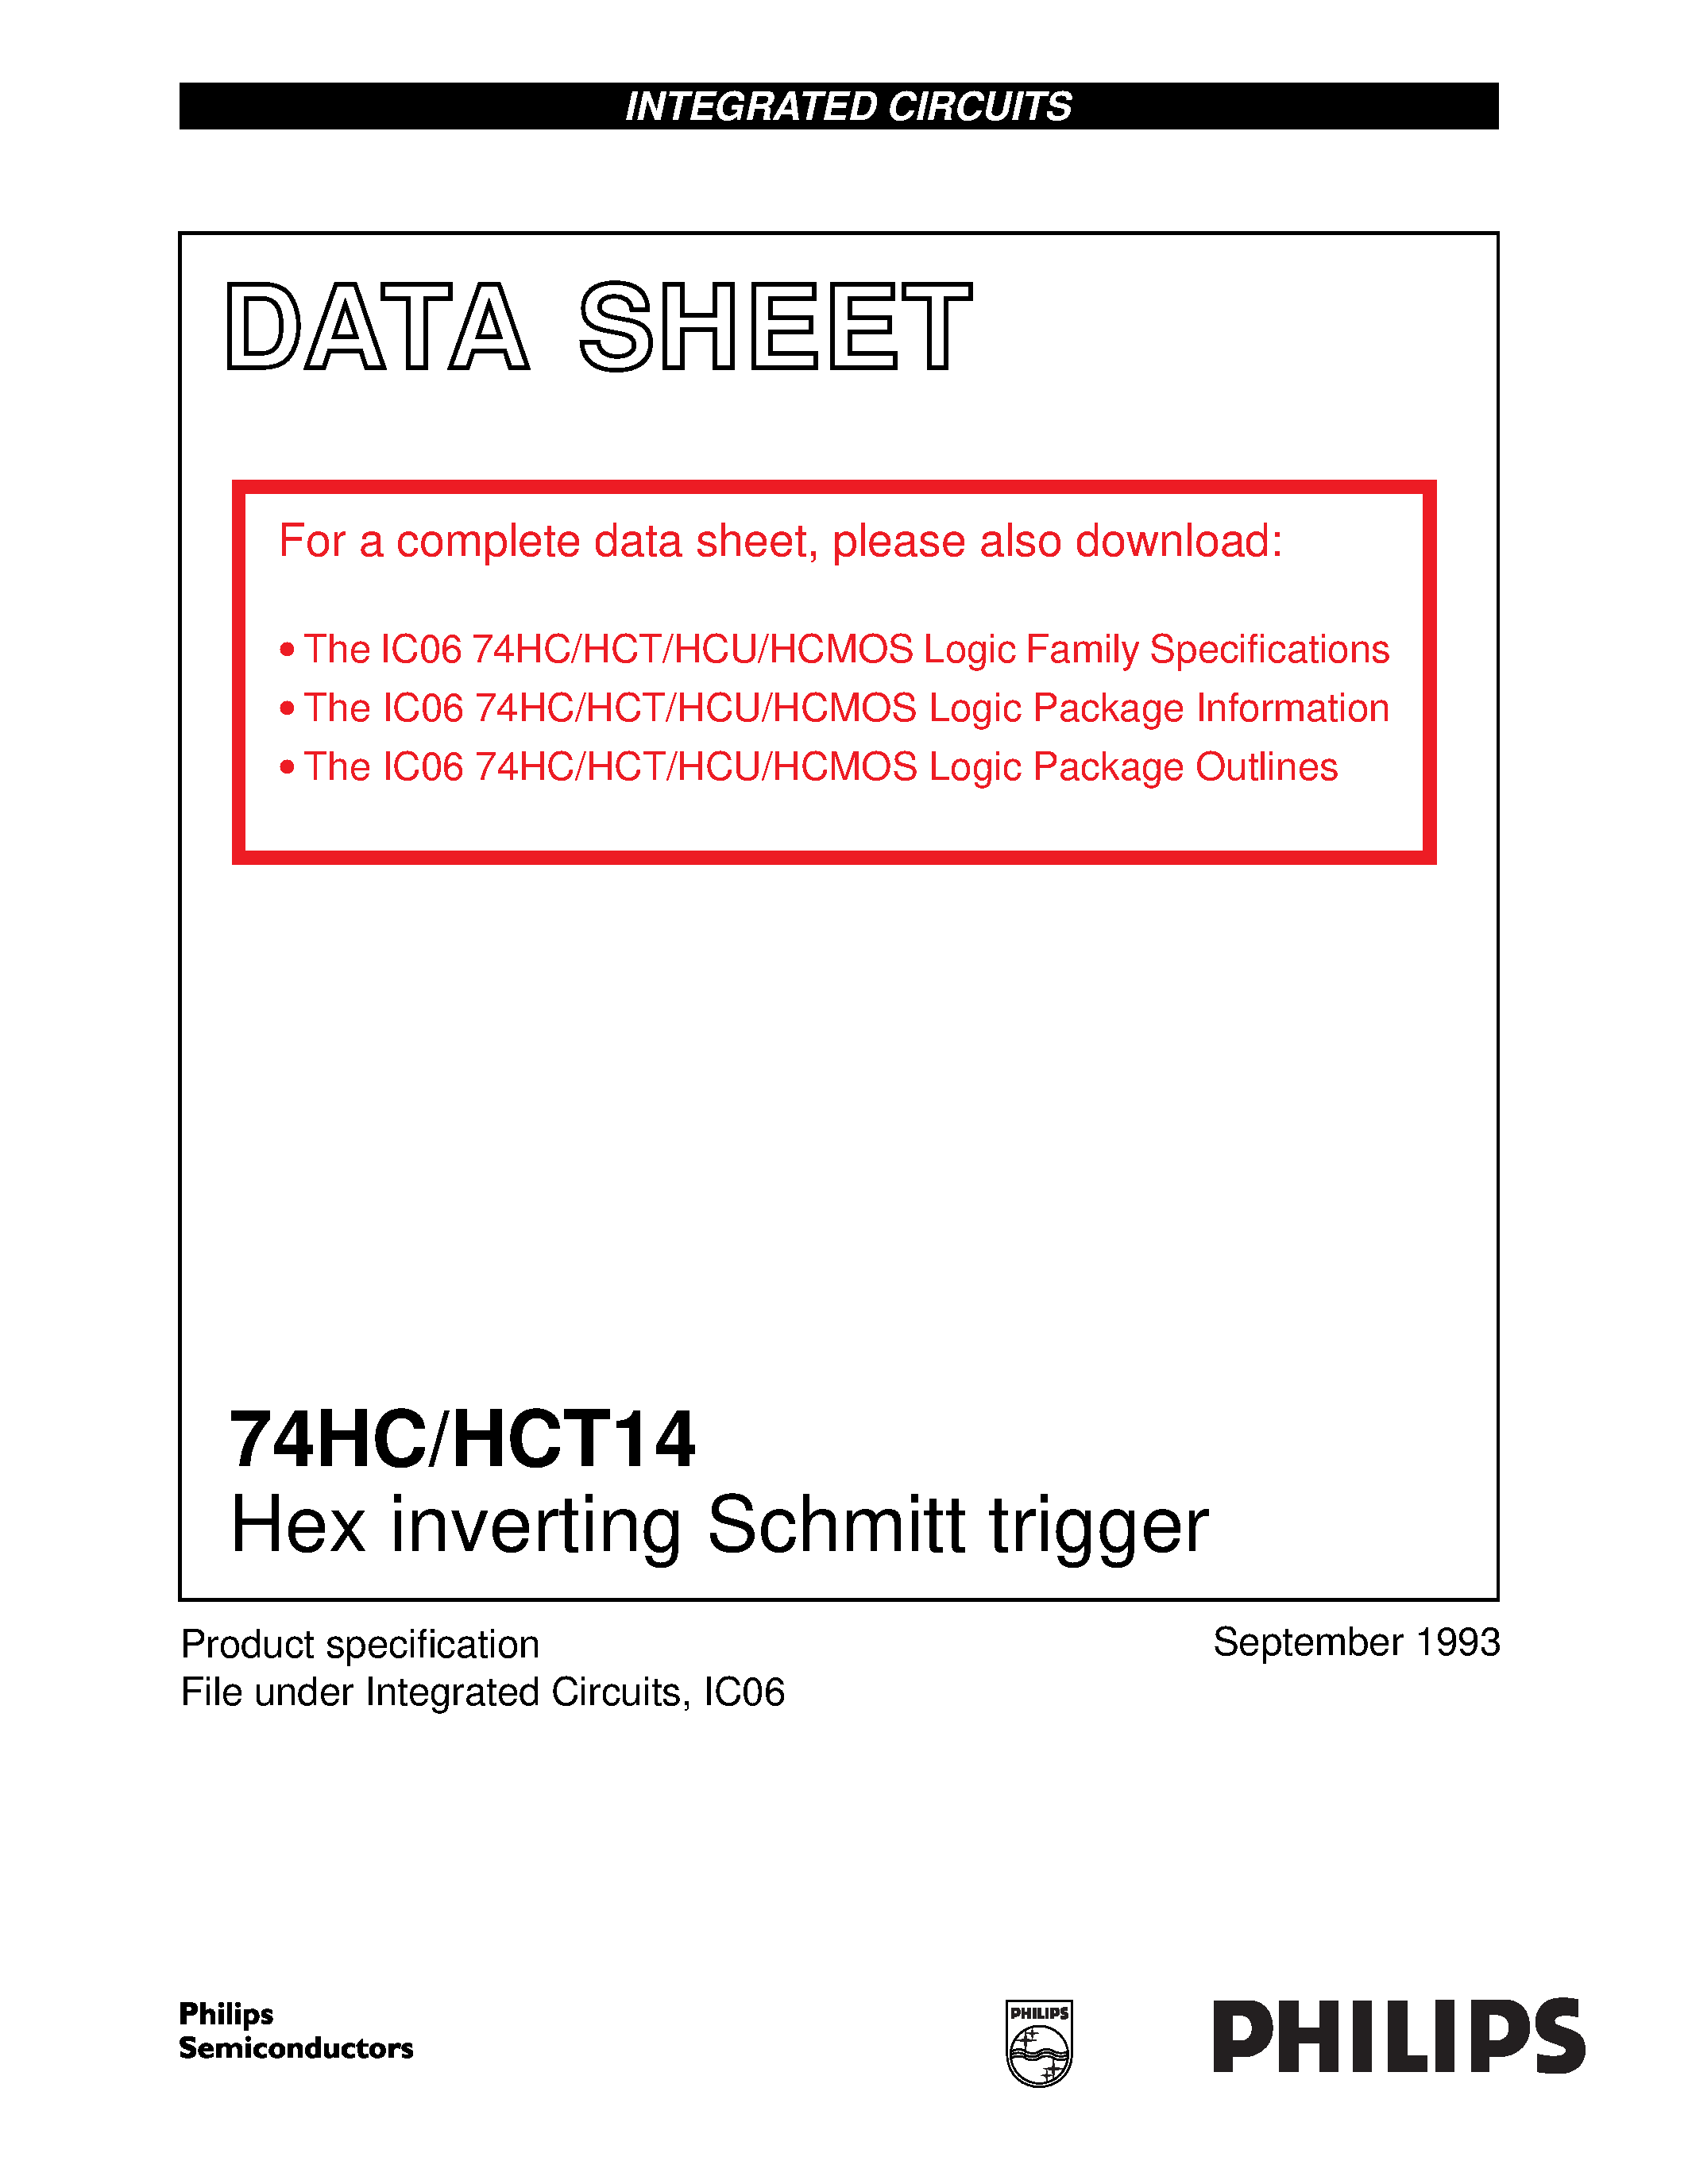 Даташит 74HCT14 - Hex inverting Schmitt trigger страница 1